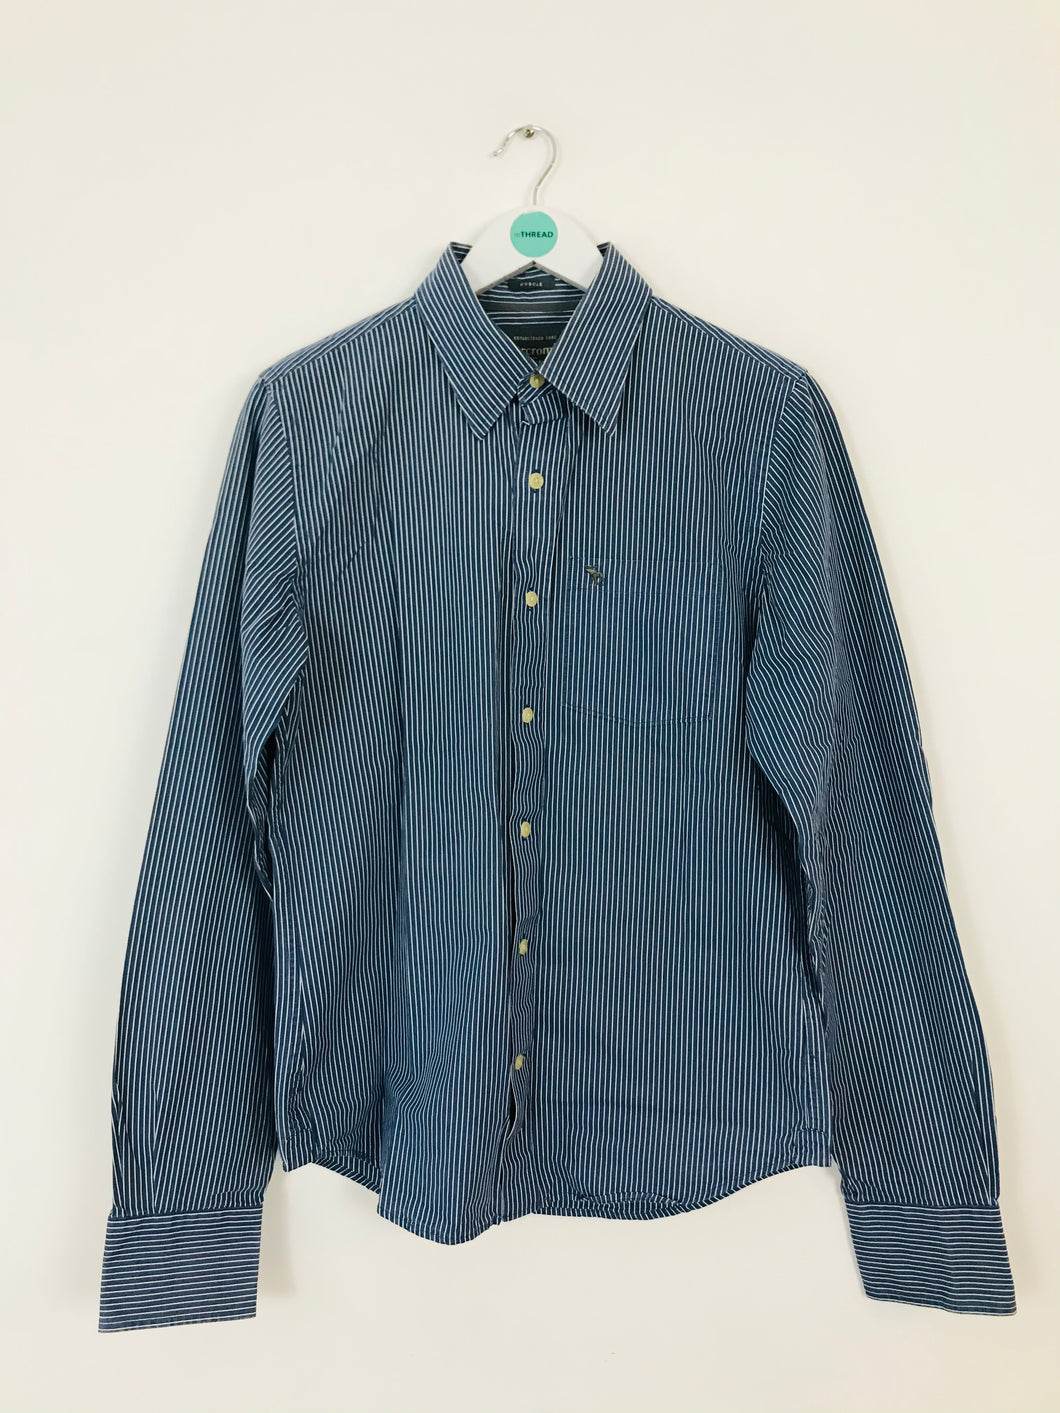 Abercrombie & Fitch Men’s Pin Stripe Long Sleeve Shirt | M | Blue